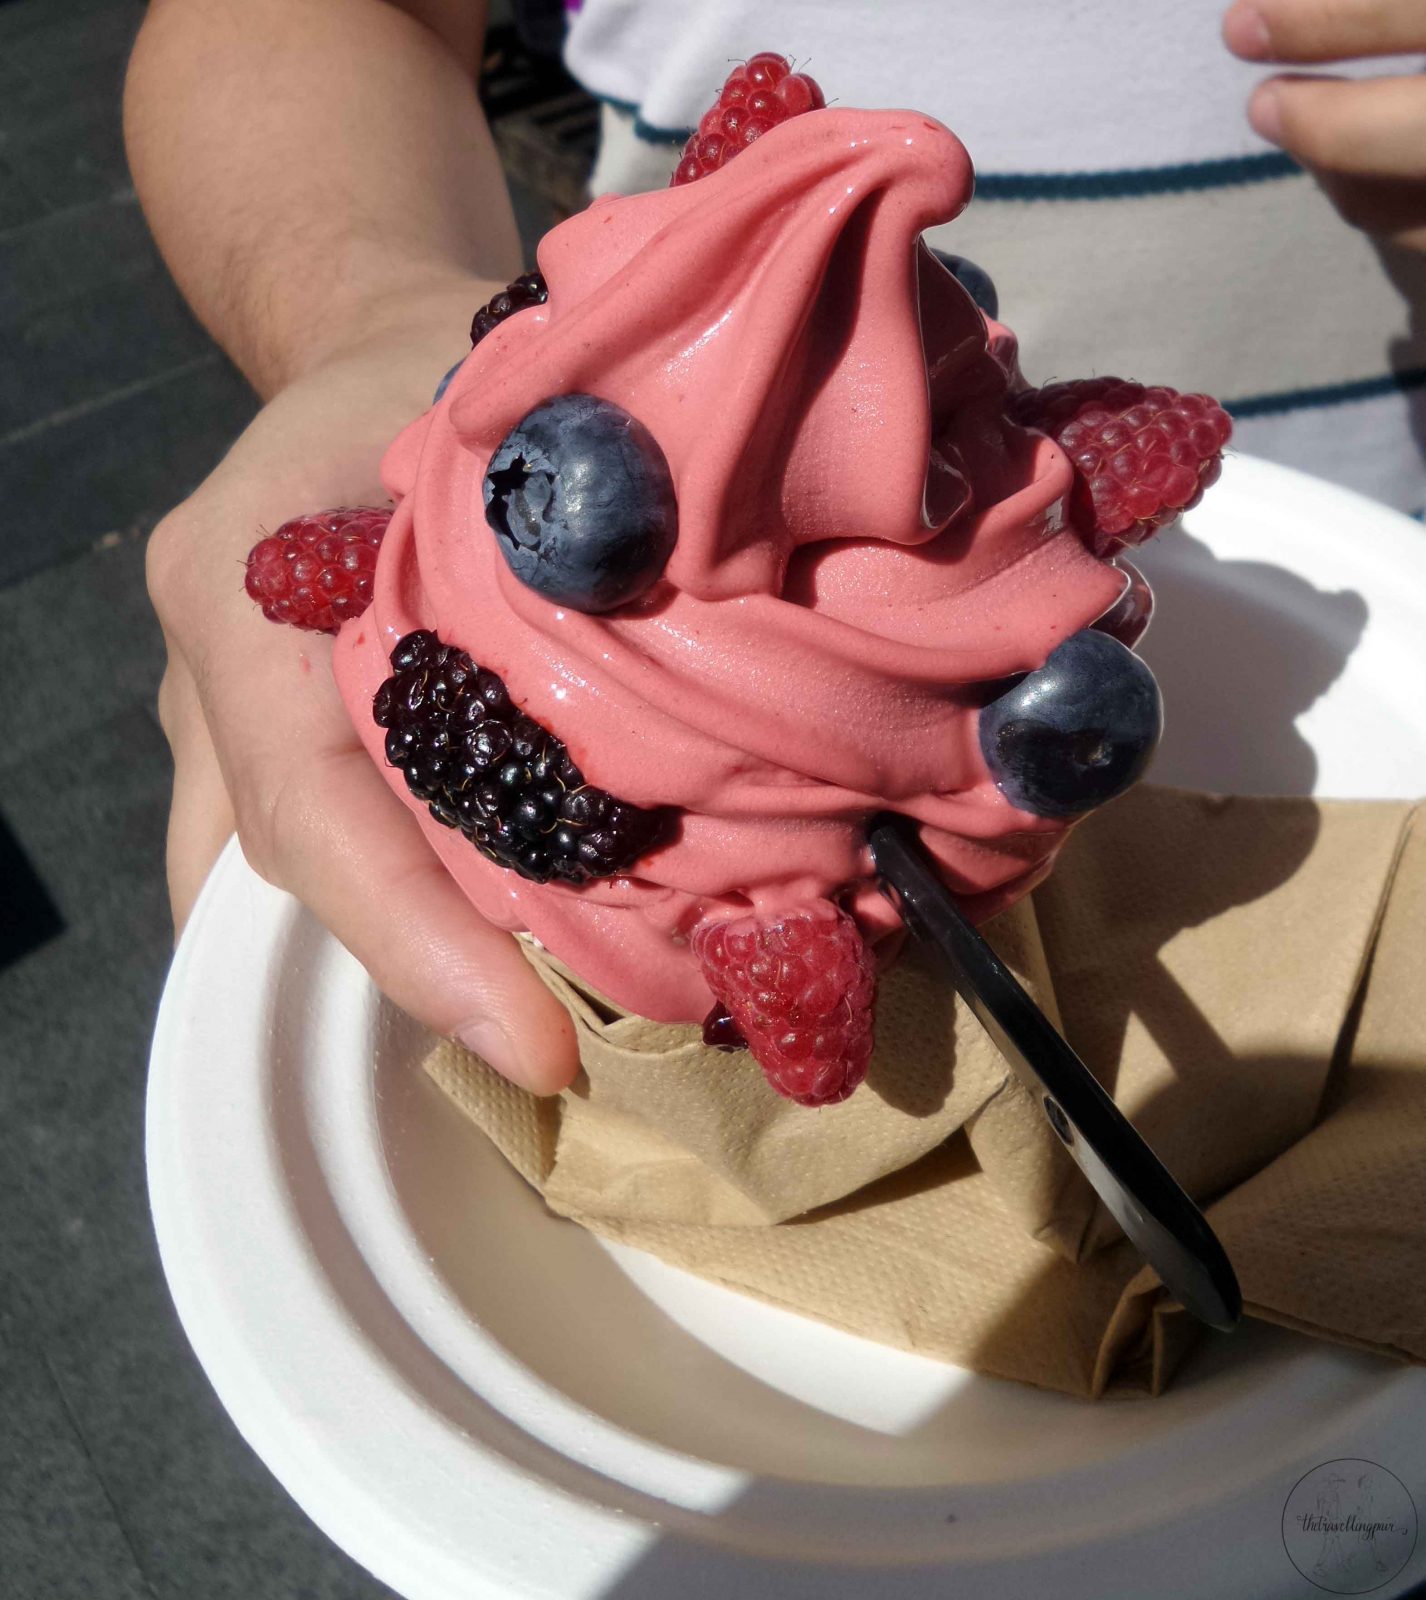 Giapo-berry-ice-cream-edited-with-watermark